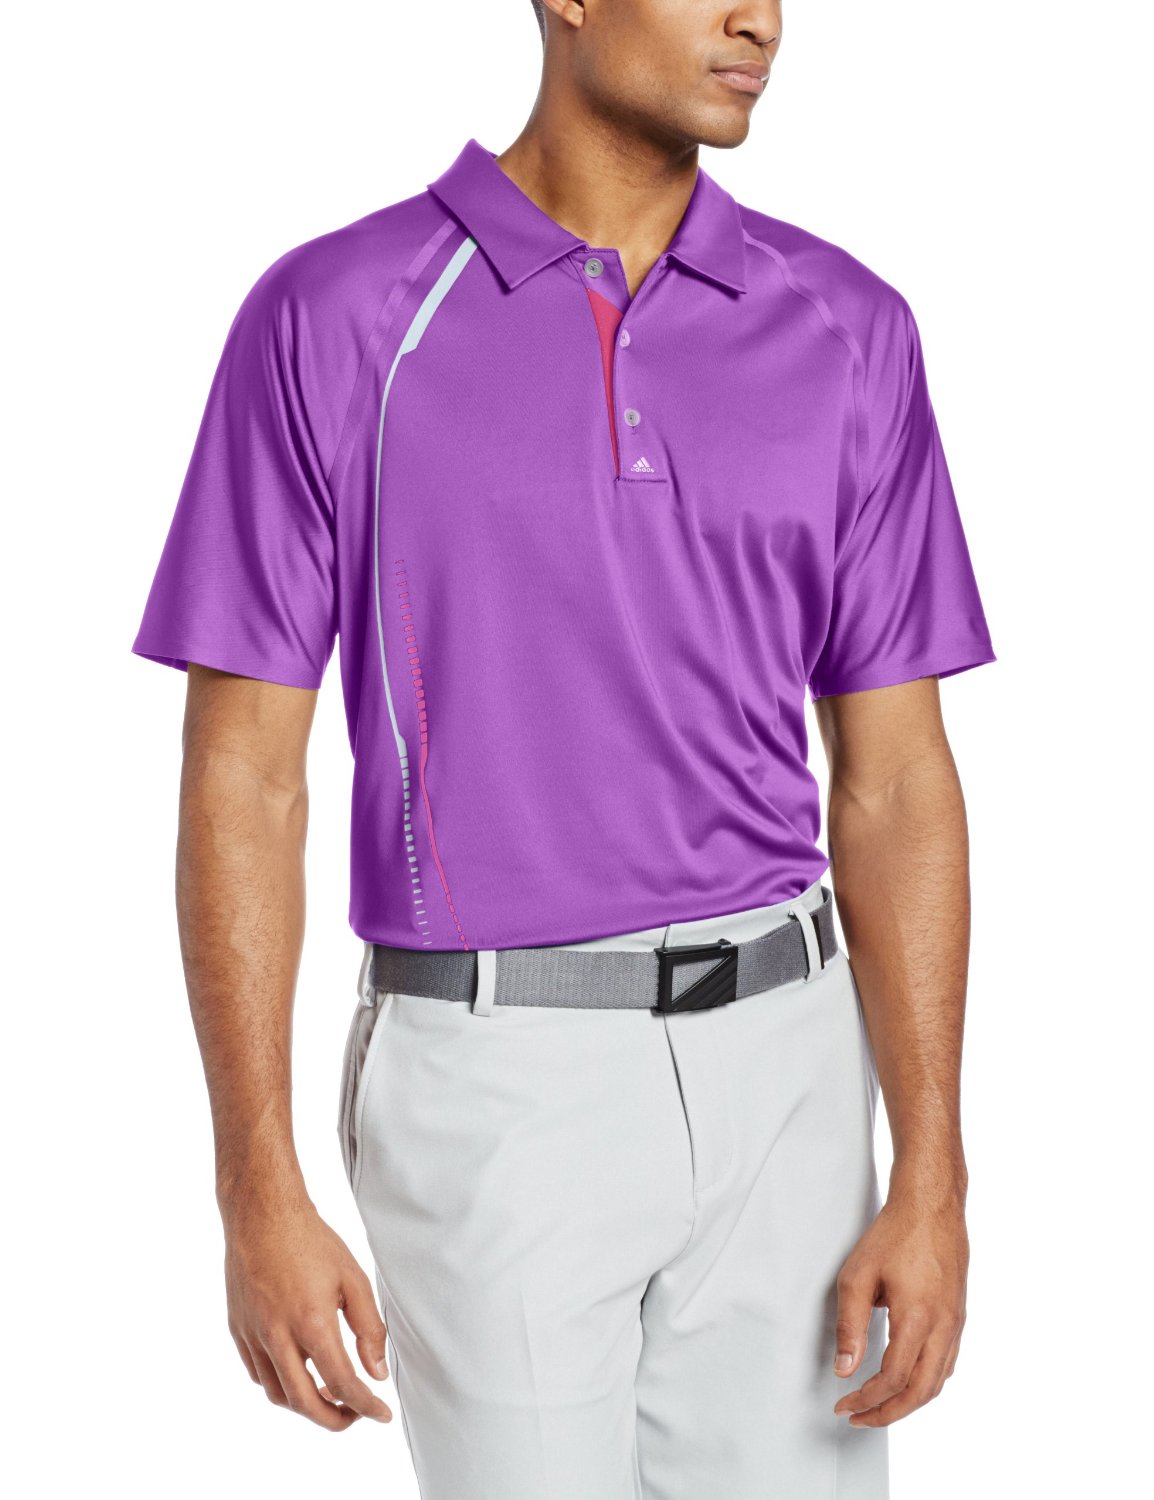 Mens Adidas Puremotion Tour Climacool Graphic Print Golf Polo Shirts